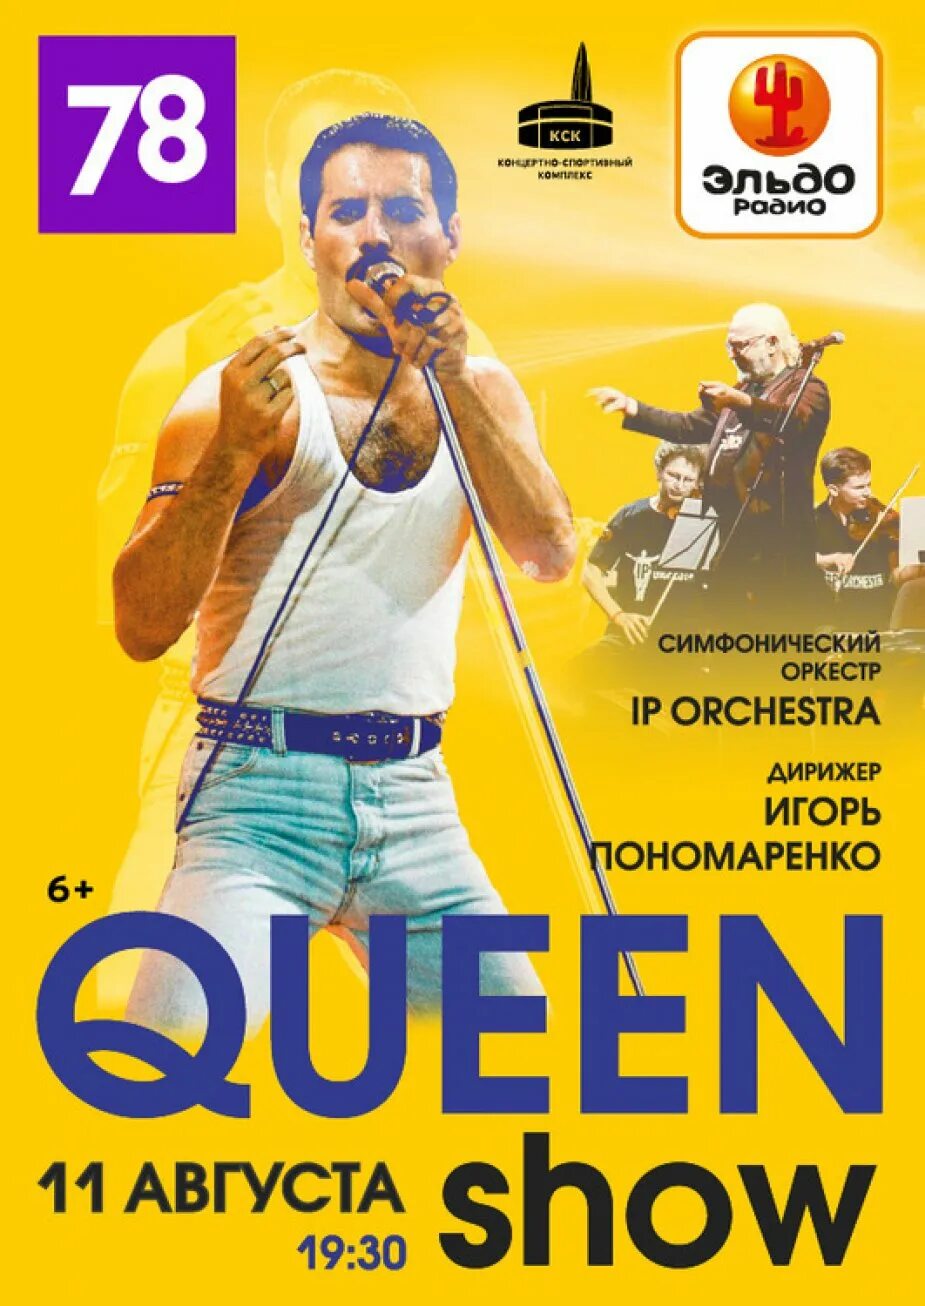 Афиша 11. IP Orchestra Queen show. Тинькофф Арена. Симфония Пономаренко. Афиша Queen show 11 августа.